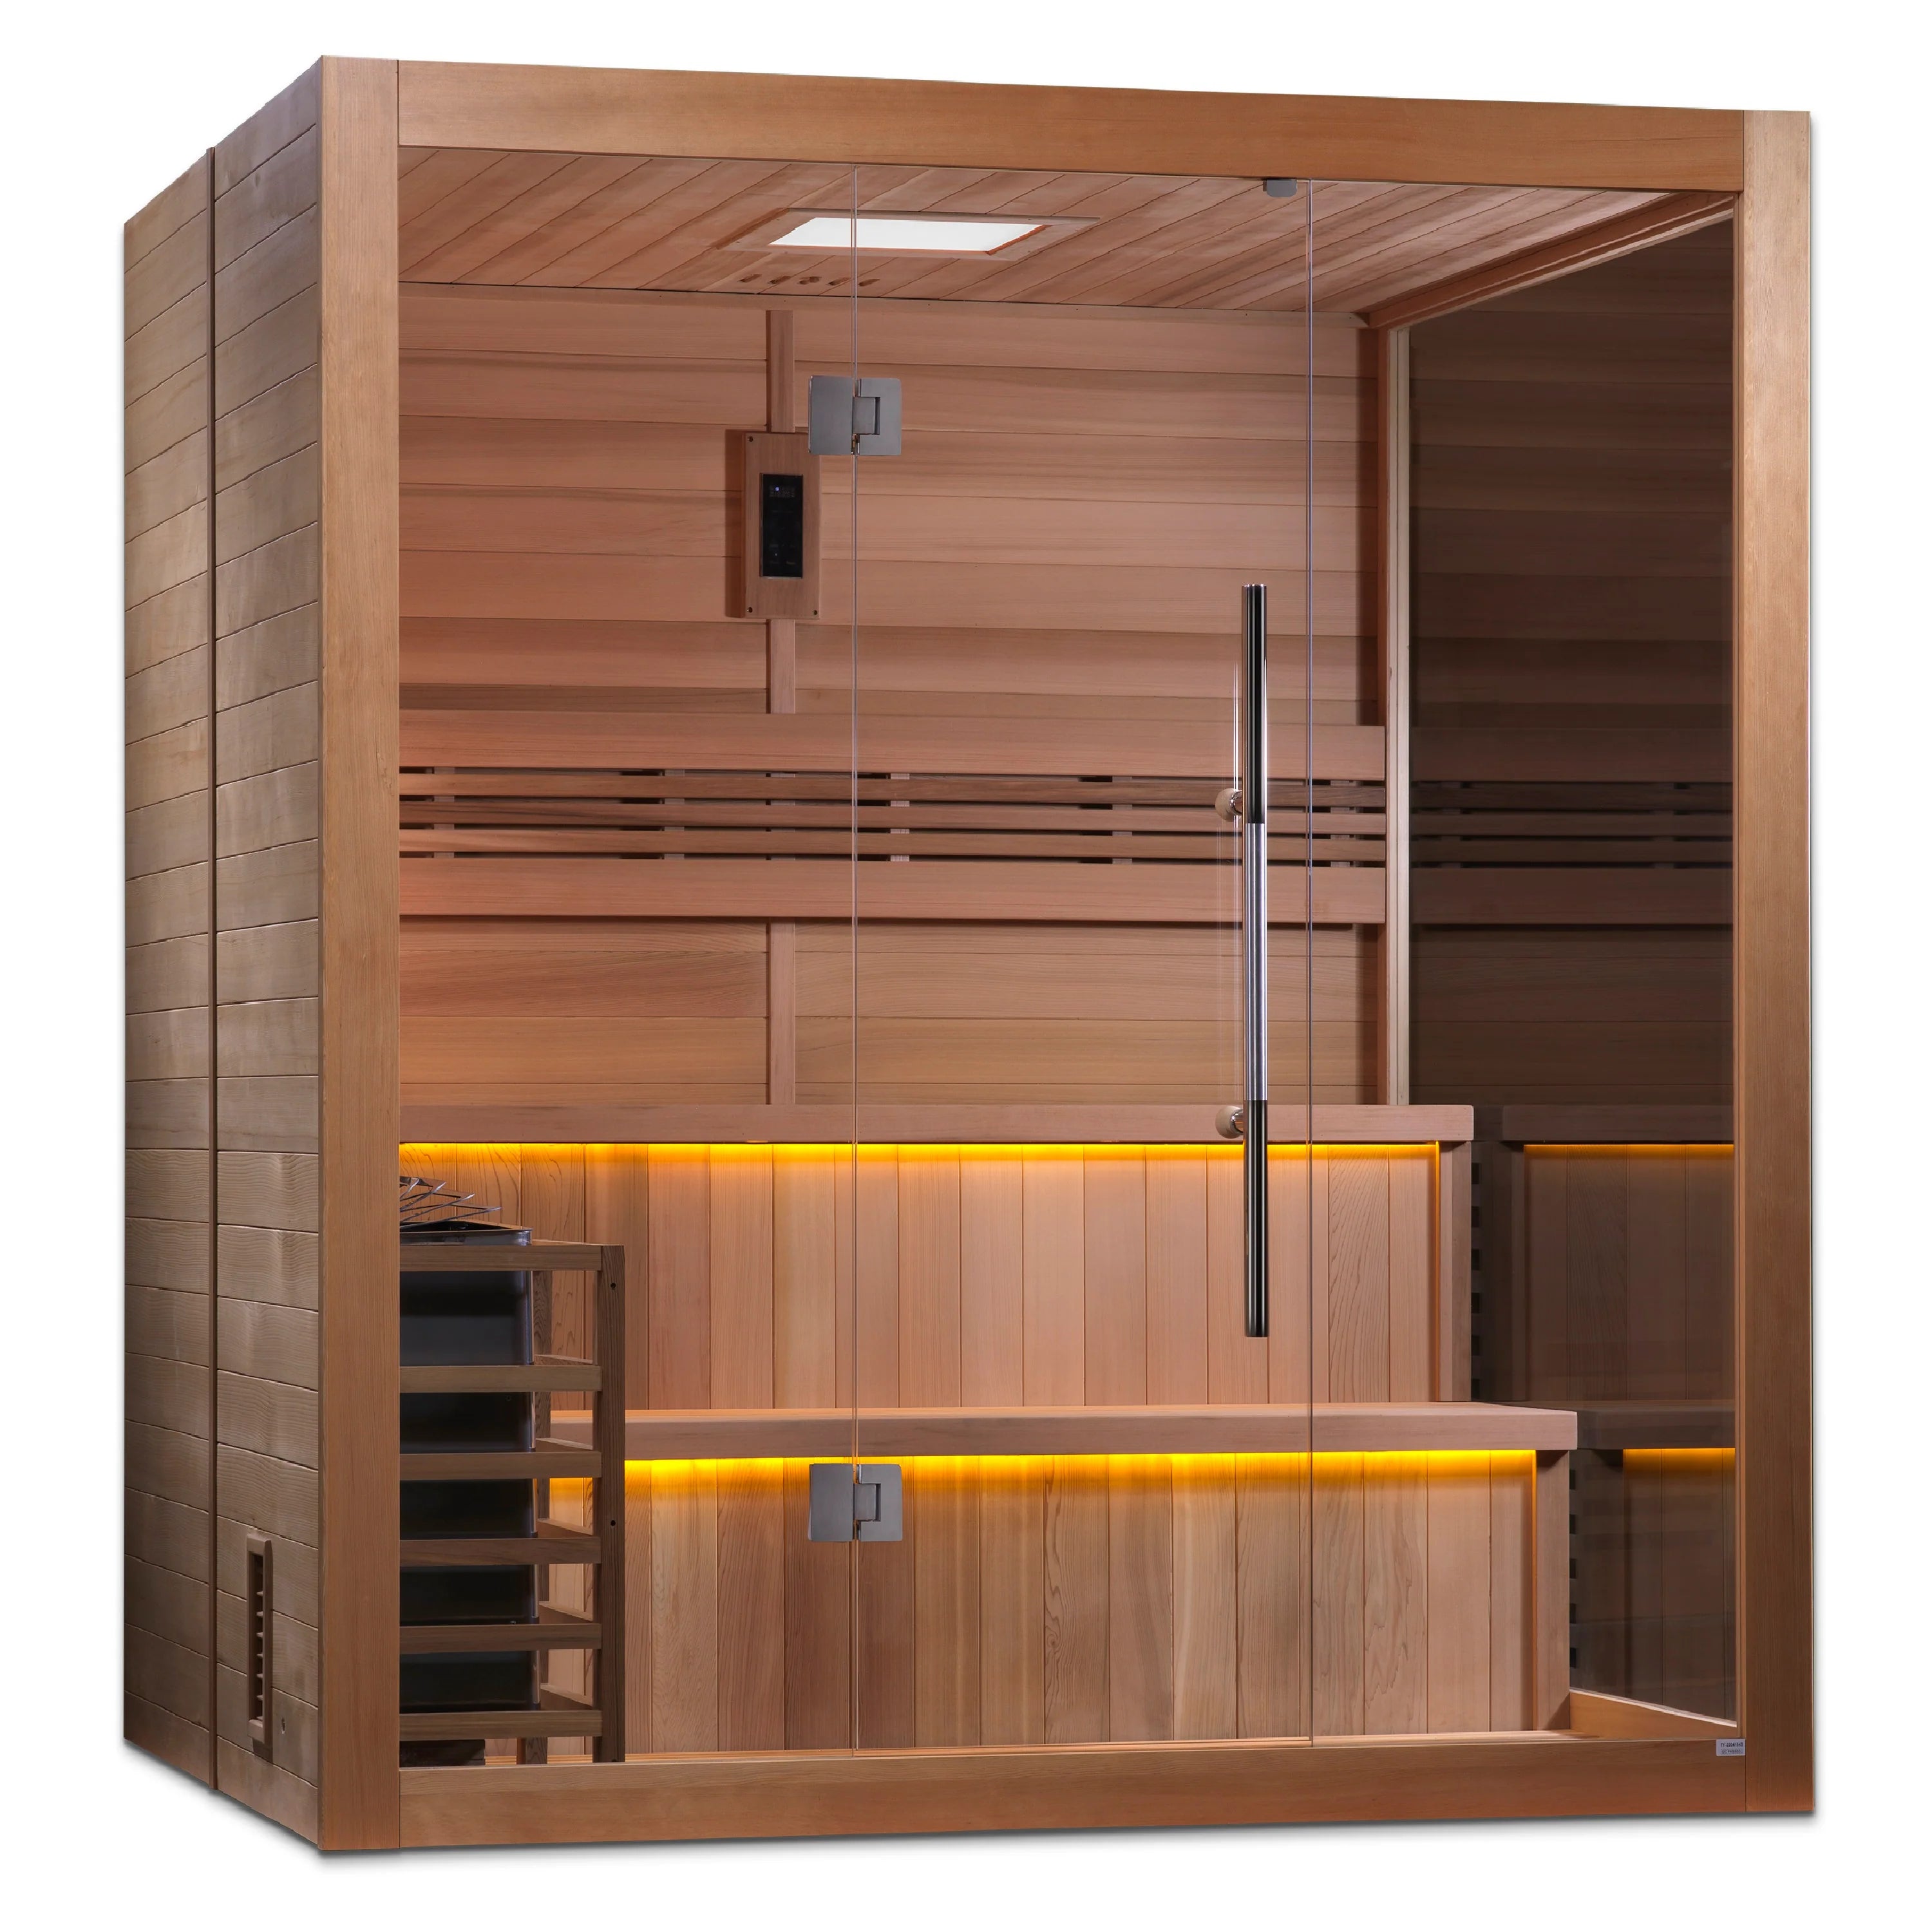 Golden Designs Kuusamo Edition 6 Person Indoor Traditional Sauna Indoor Sauna Golden Designs Saunas   